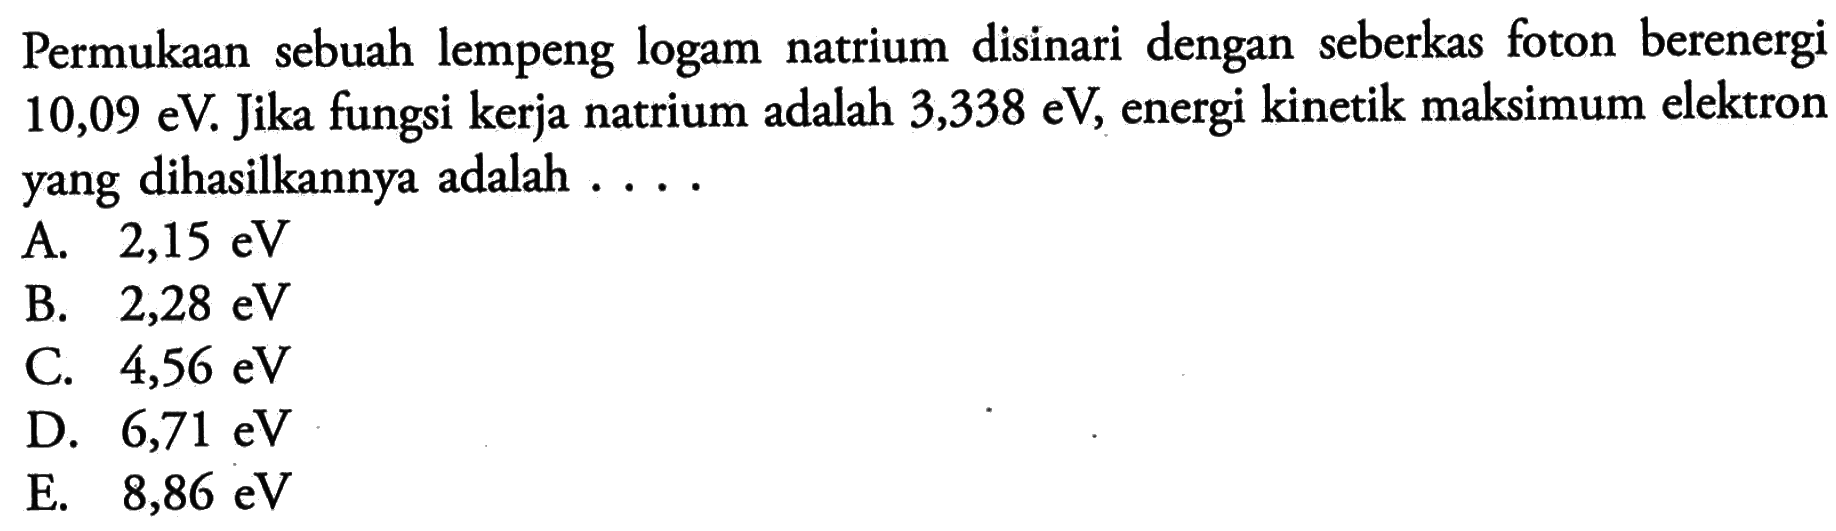 Permukaan sebuah lempeng logam natrium disinari dengan seberkas foton berenergi  10,09 eV . Jika fungsi kerja natrium adalah  3,338 eV , energi kinetik maksimum elektron yang dihasilkannya adalah  ... . 